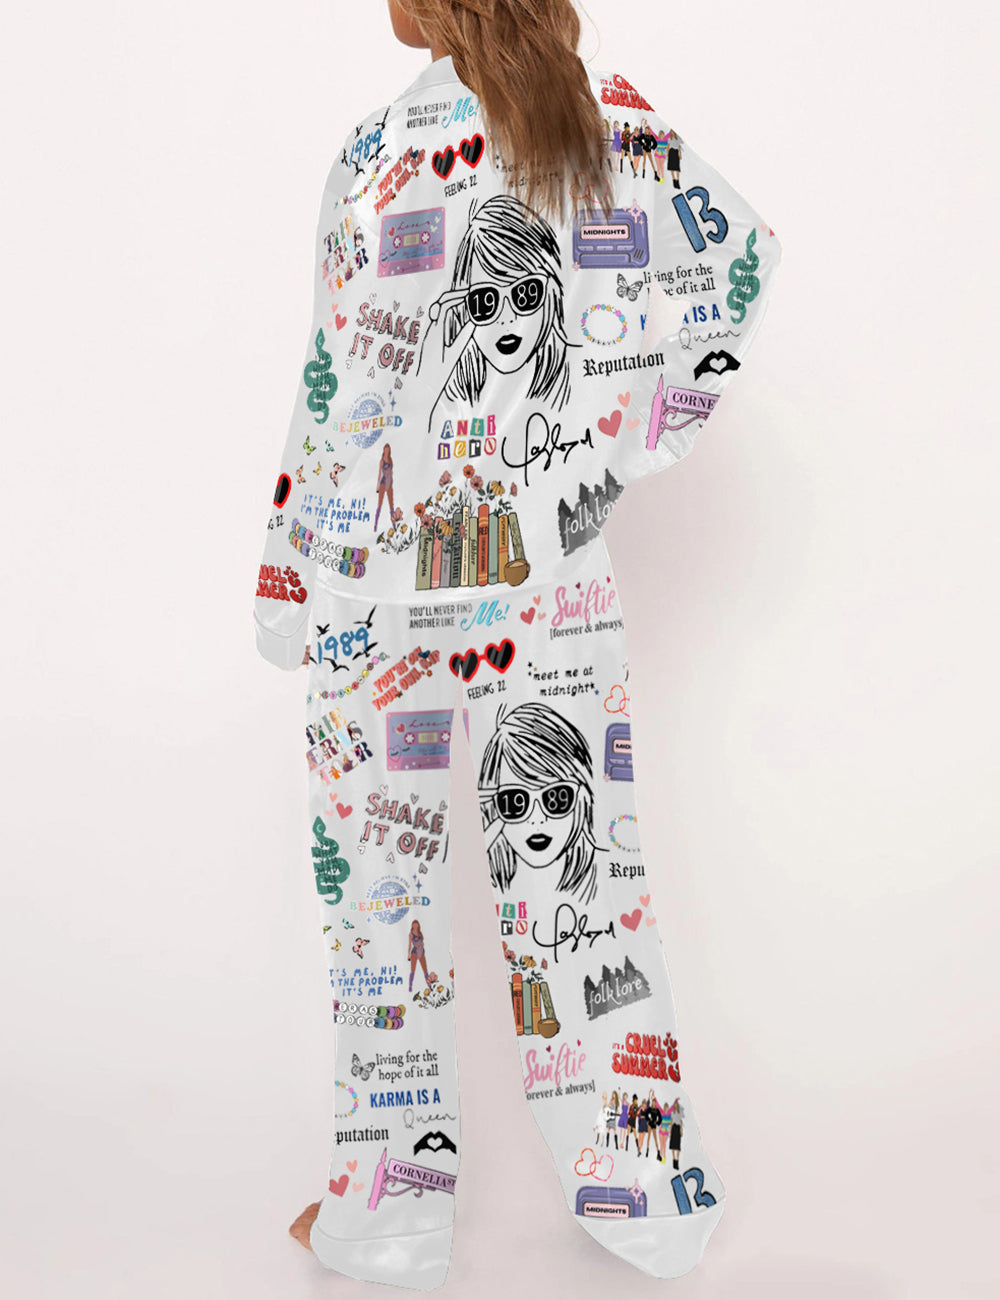 Swiftie White Pajamas - Pajamas Taylor Swift For Fan Gifts - Taylor Swift Pajama For Women